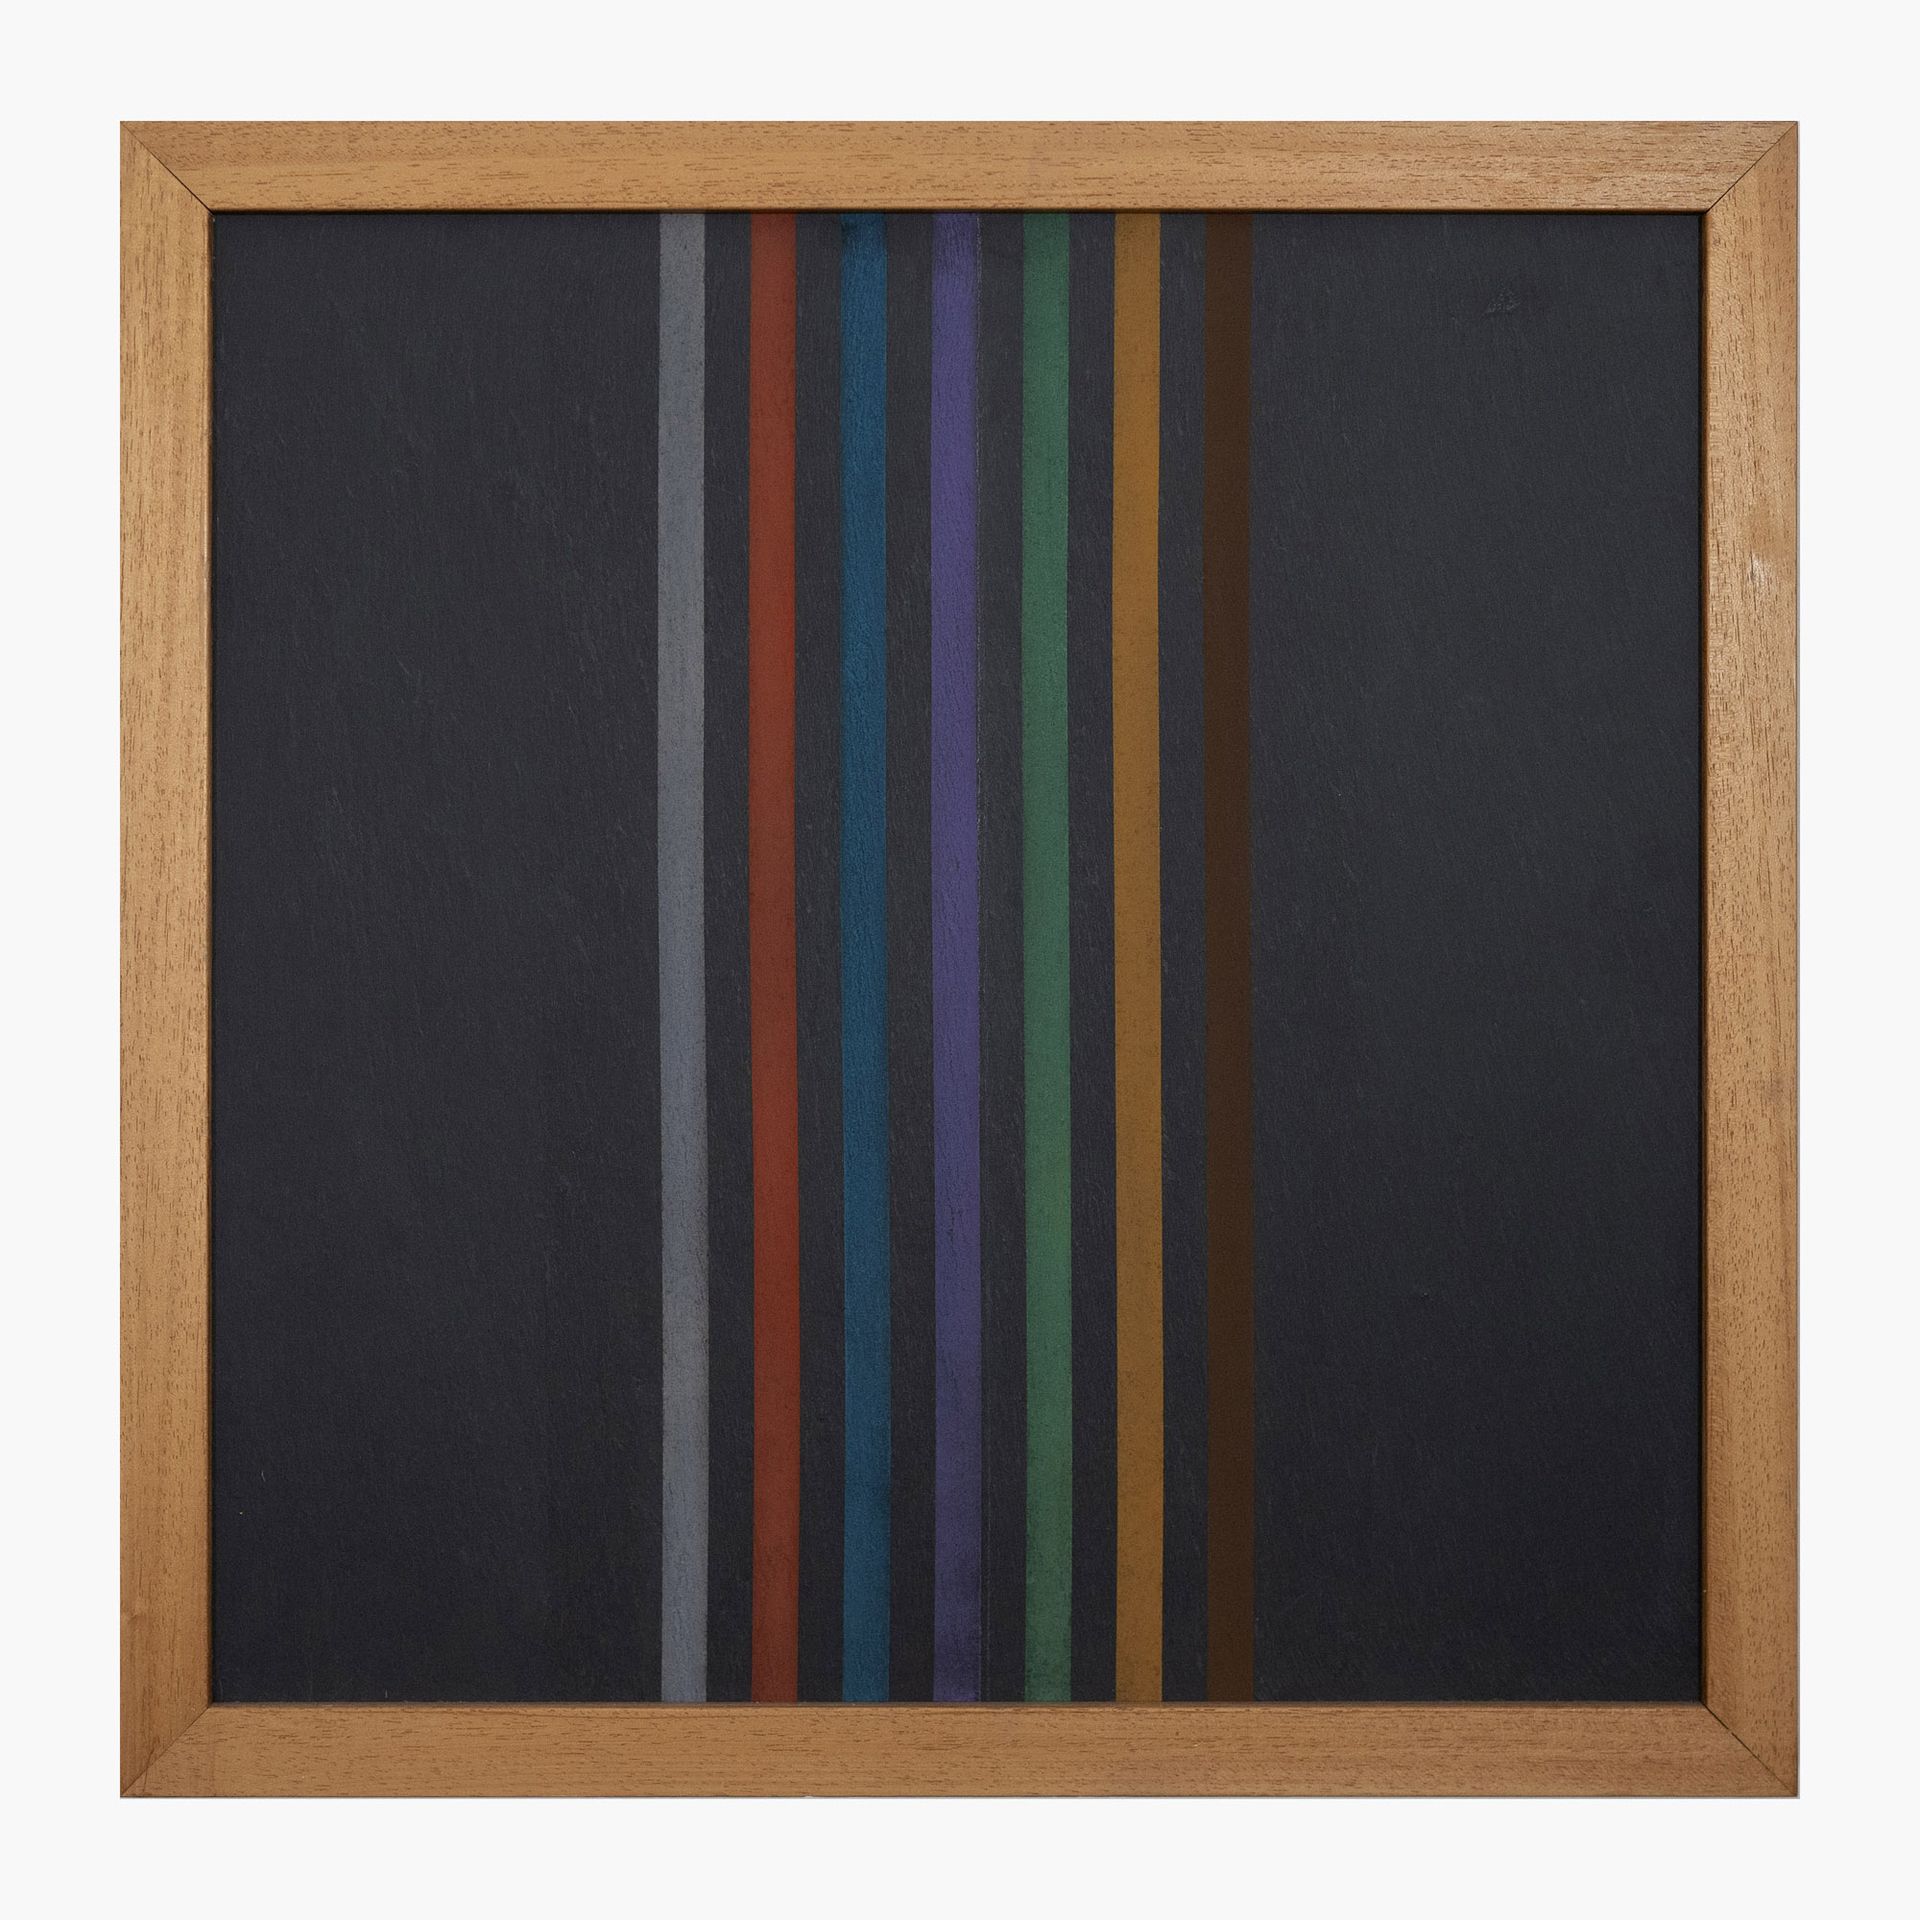 Elio Marchegiani Elio Marchegiani, Grammature di colore



1973

黑板支持

高50 x 长50&hellip;